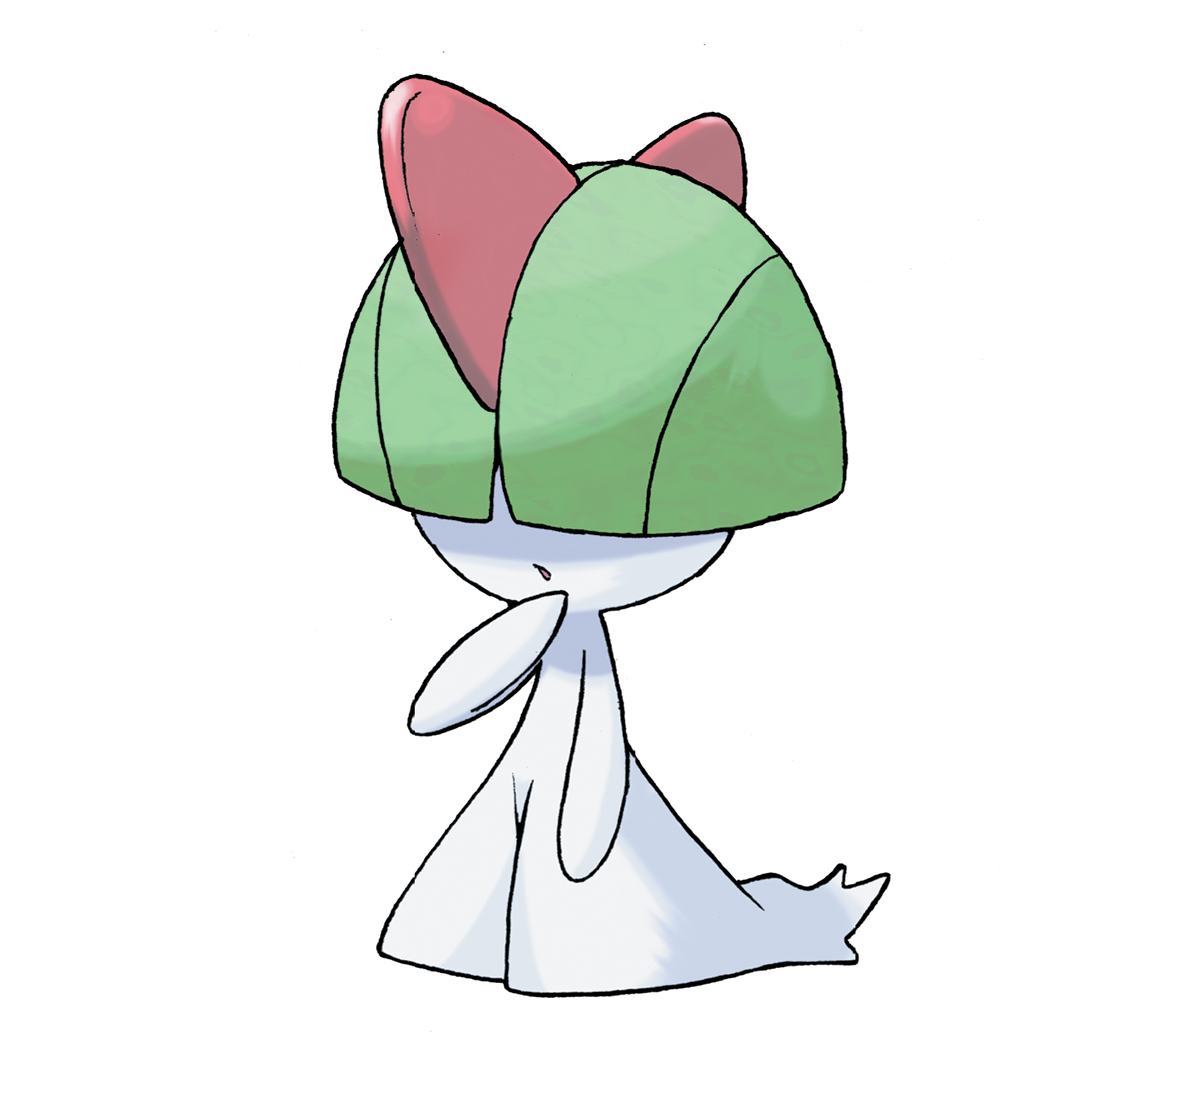 Trevenant (xy 9) (065) (rara - Psíquico) Pokémon